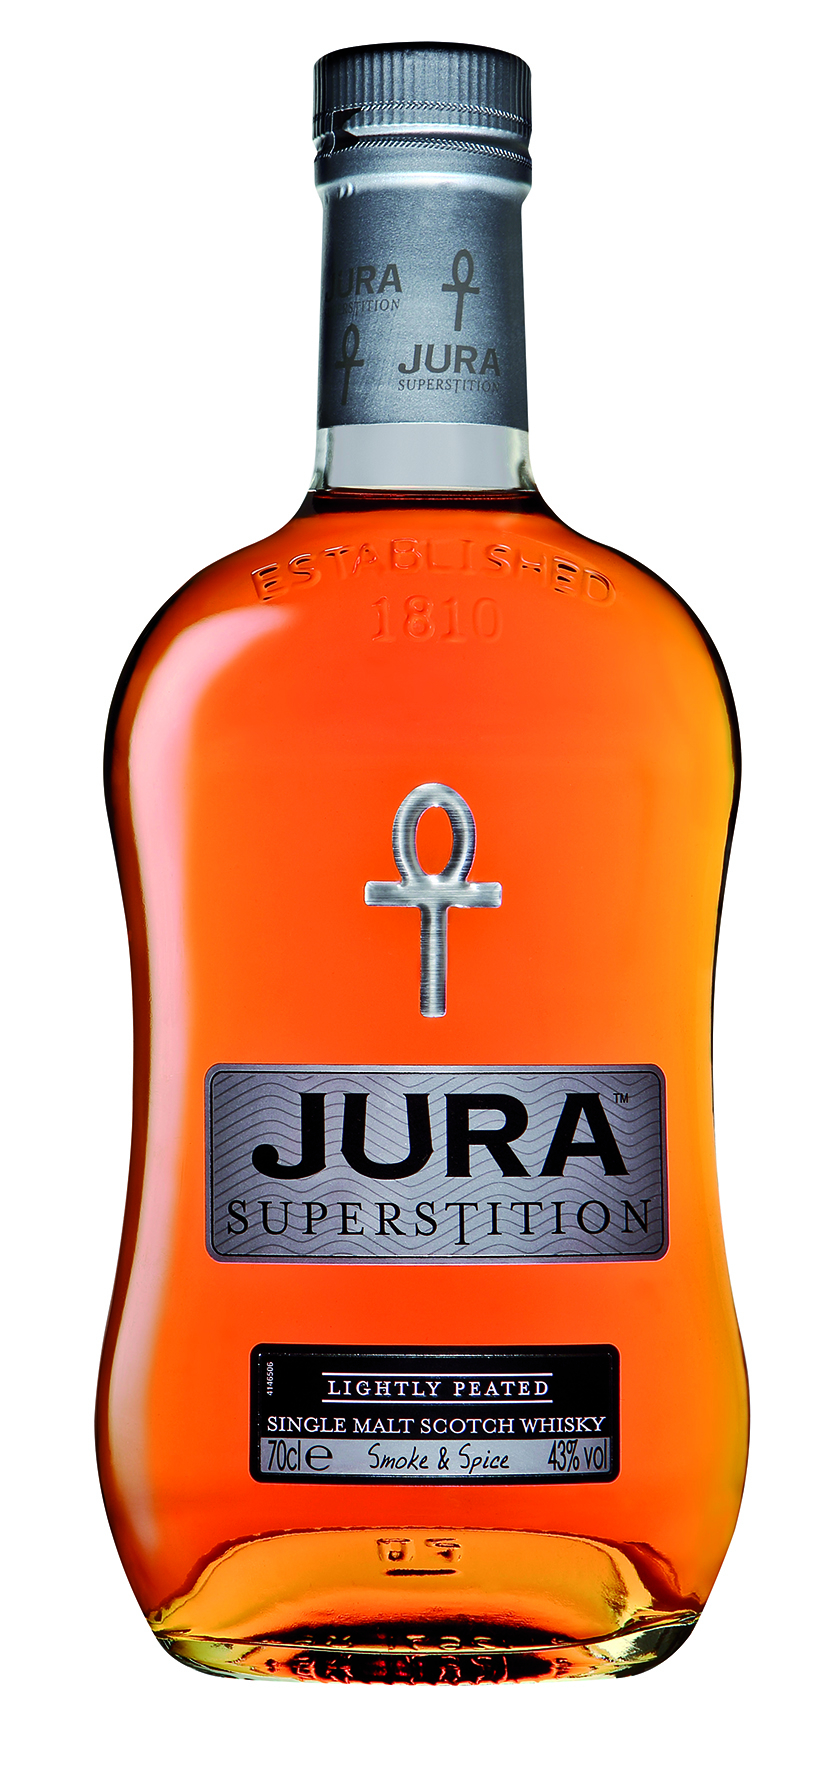 Isle of Jura Superstition Whisky